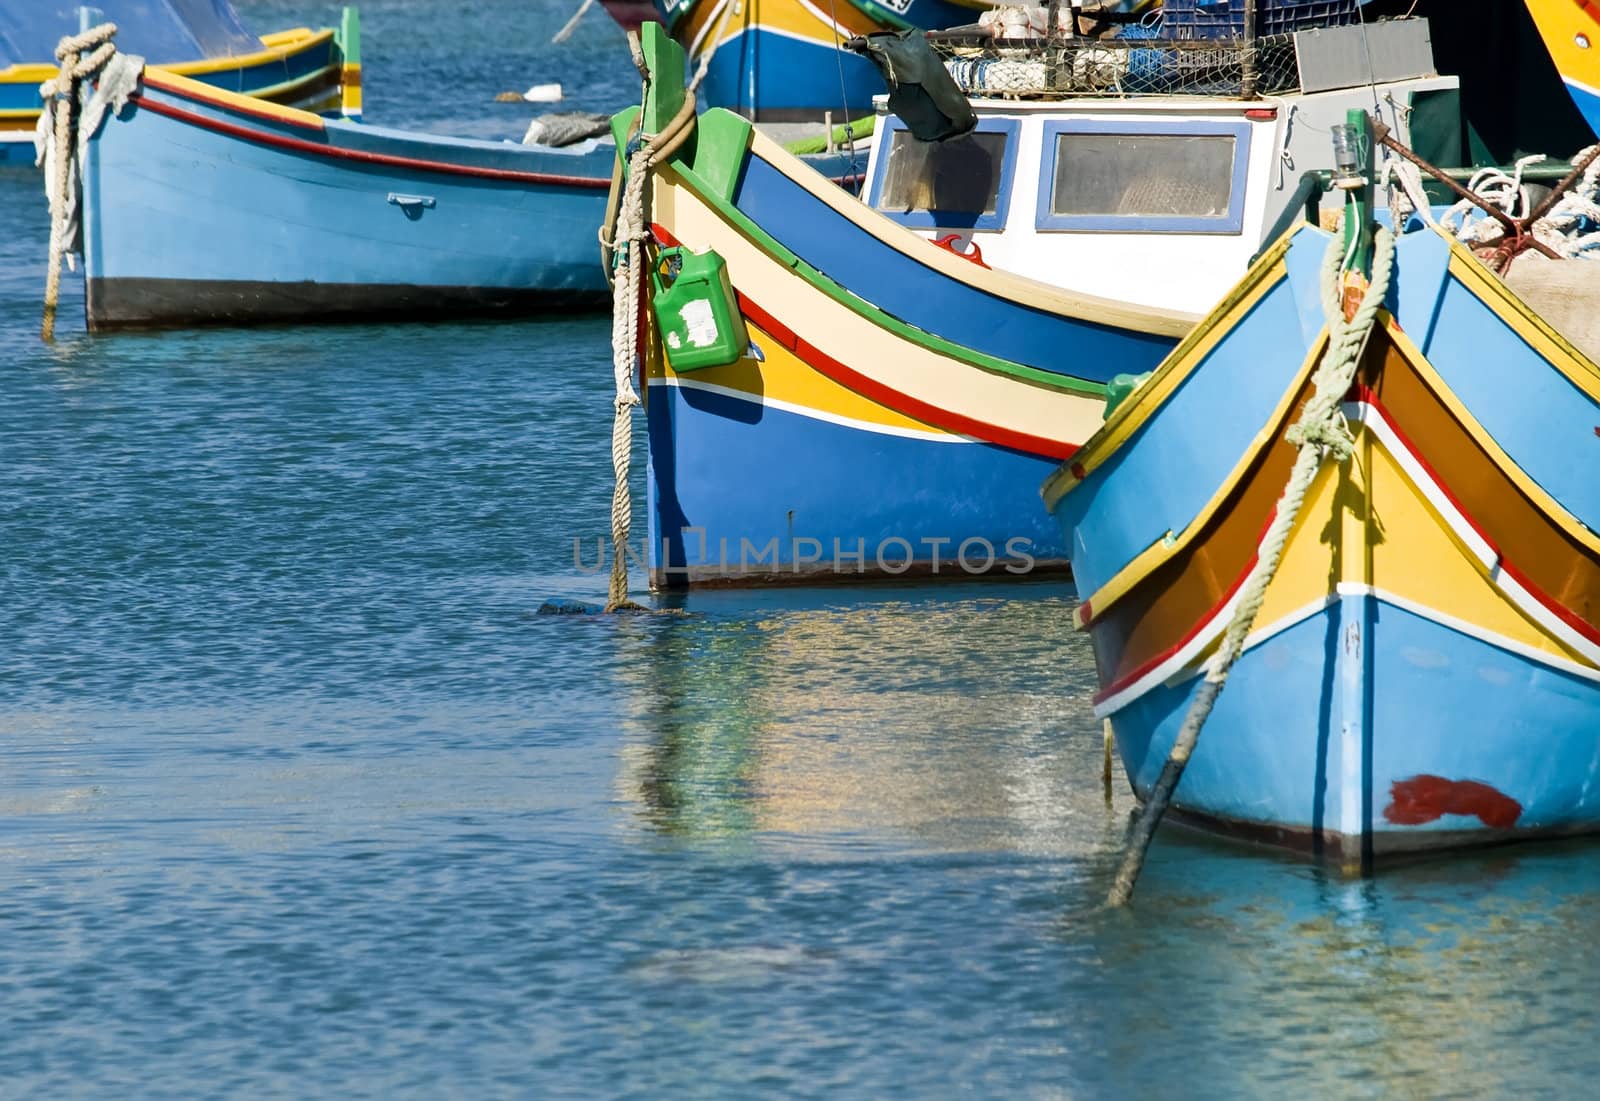 Malta Fishing Village by PhotoWorks